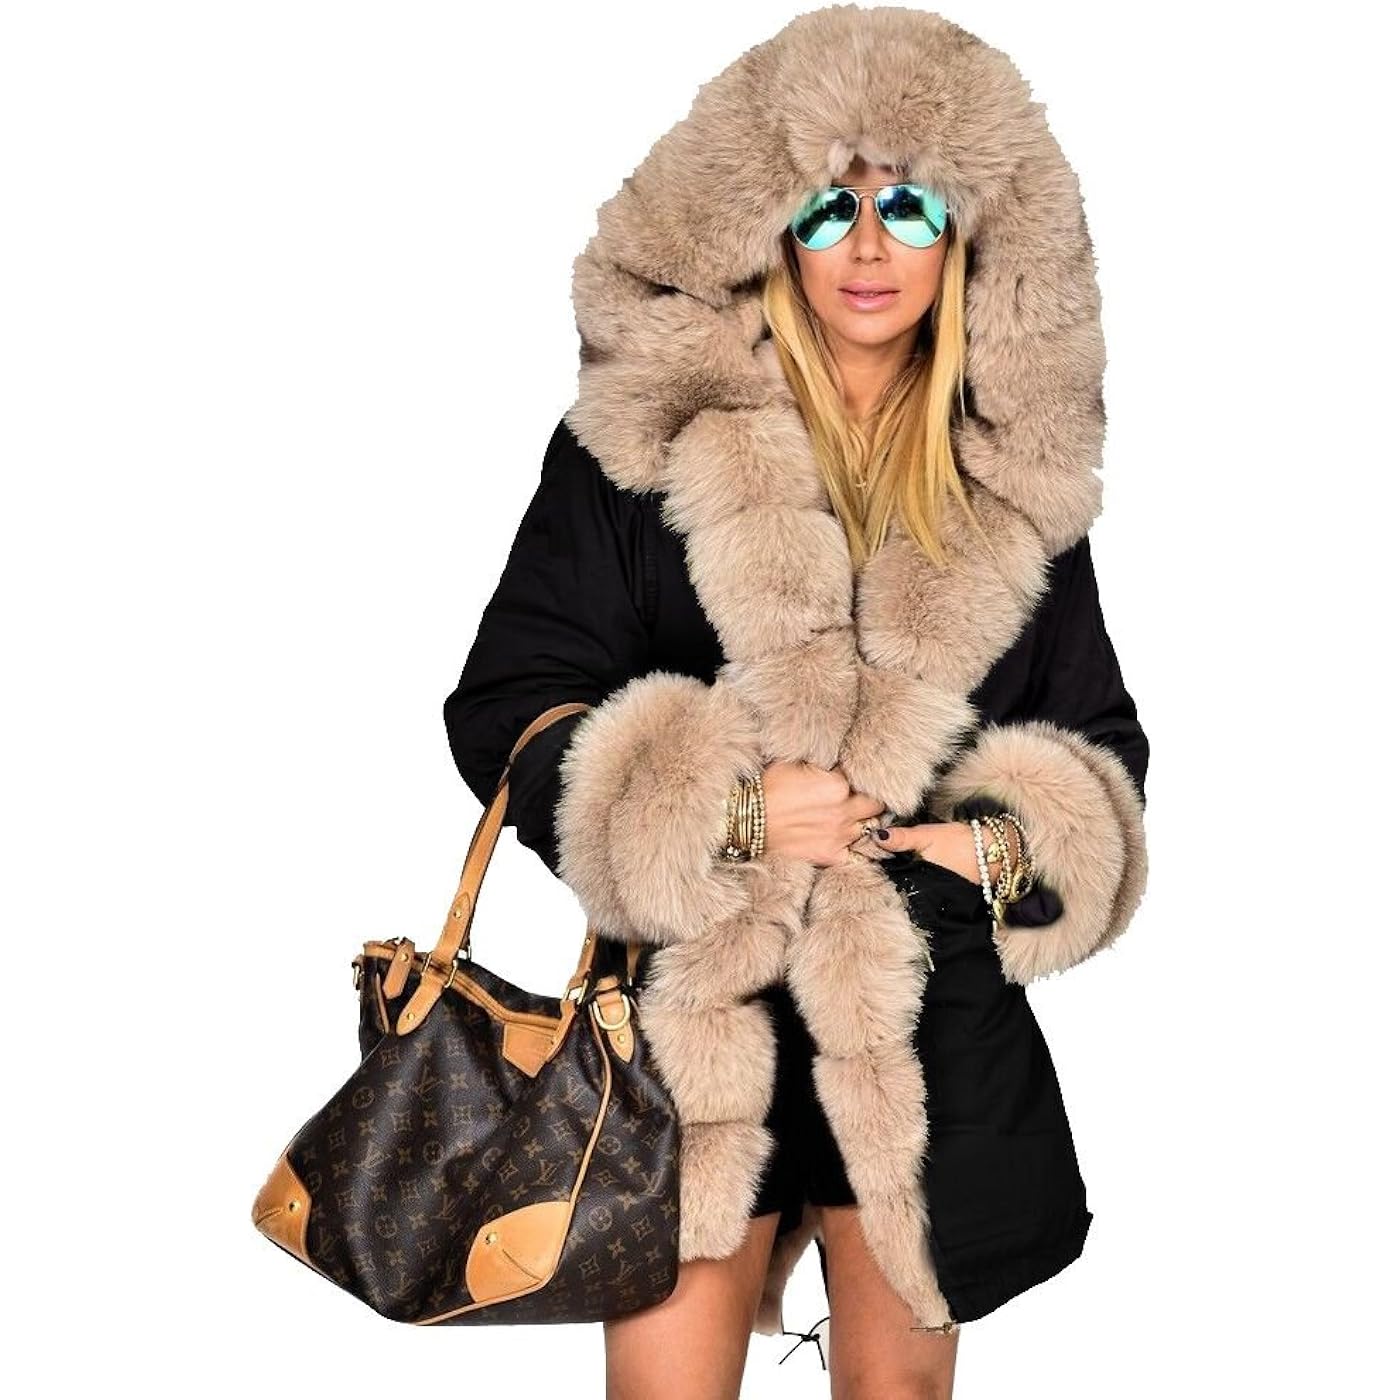 Парка Aofur Long Warm Winter Faux Fur Collar Qulited Women's, черный/бежевый